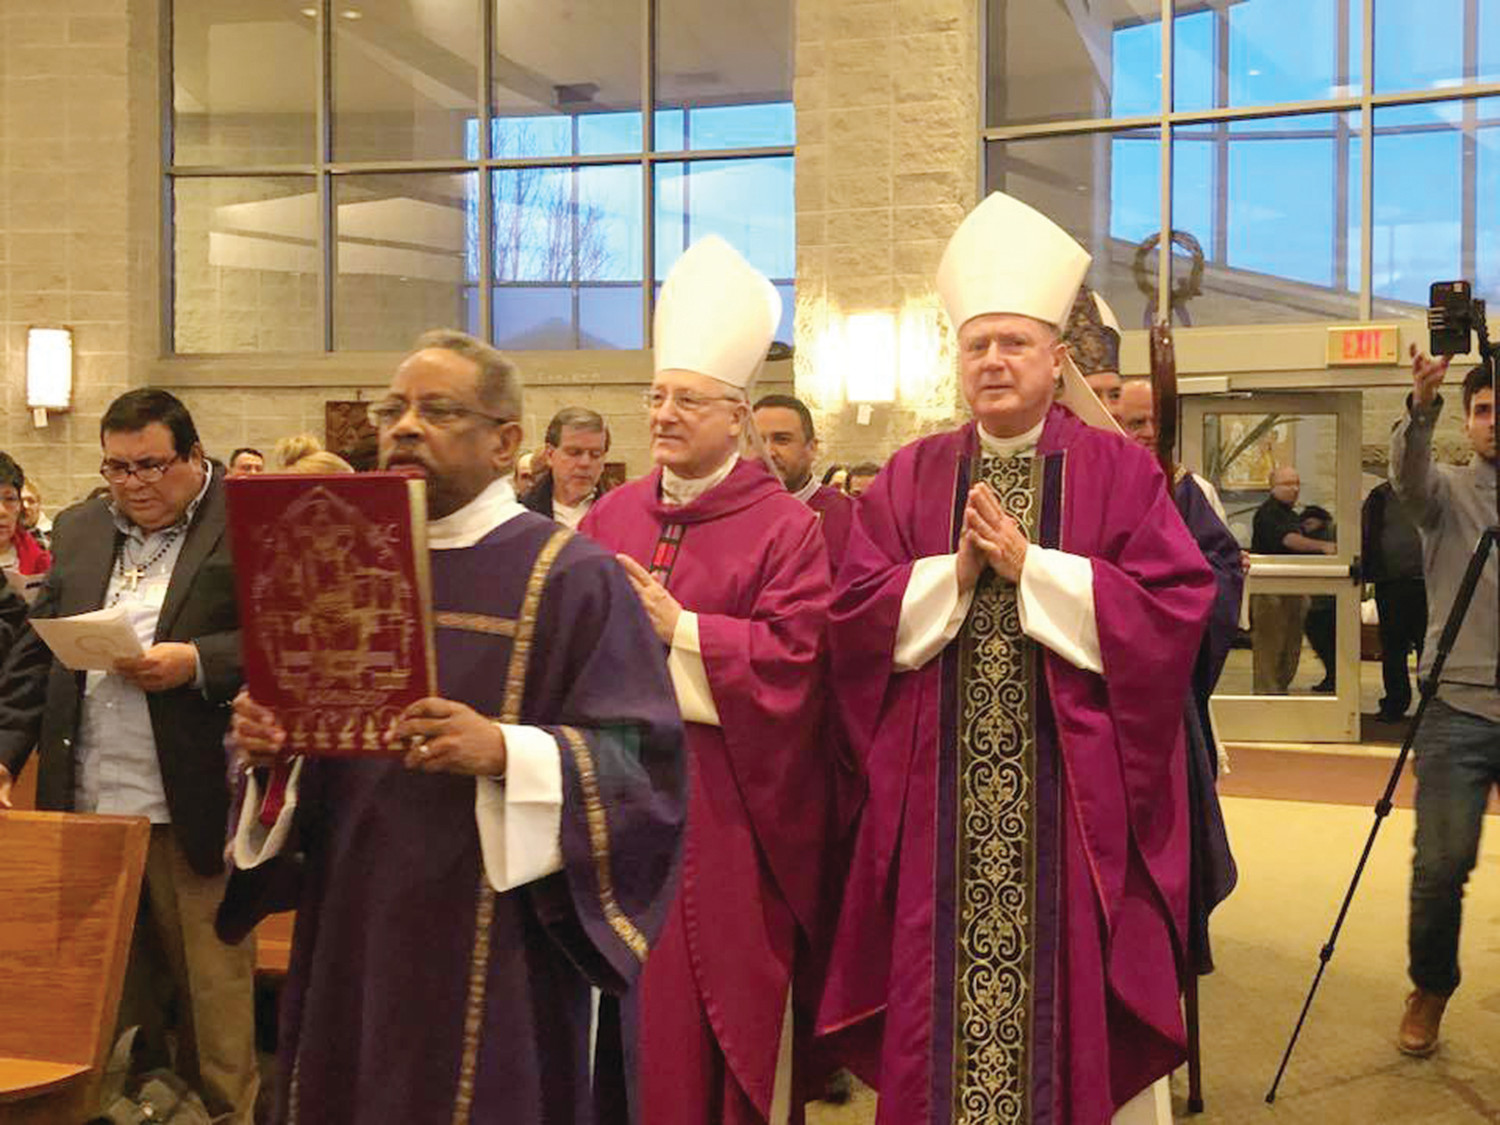 El Diácono Ramona Andrade seguido del Obispo Robert MacManus de la Diócesis de Worcester, MA  y Robert C. Evans, Obispo Auxiliar de la Diócesis de Providence, RI.